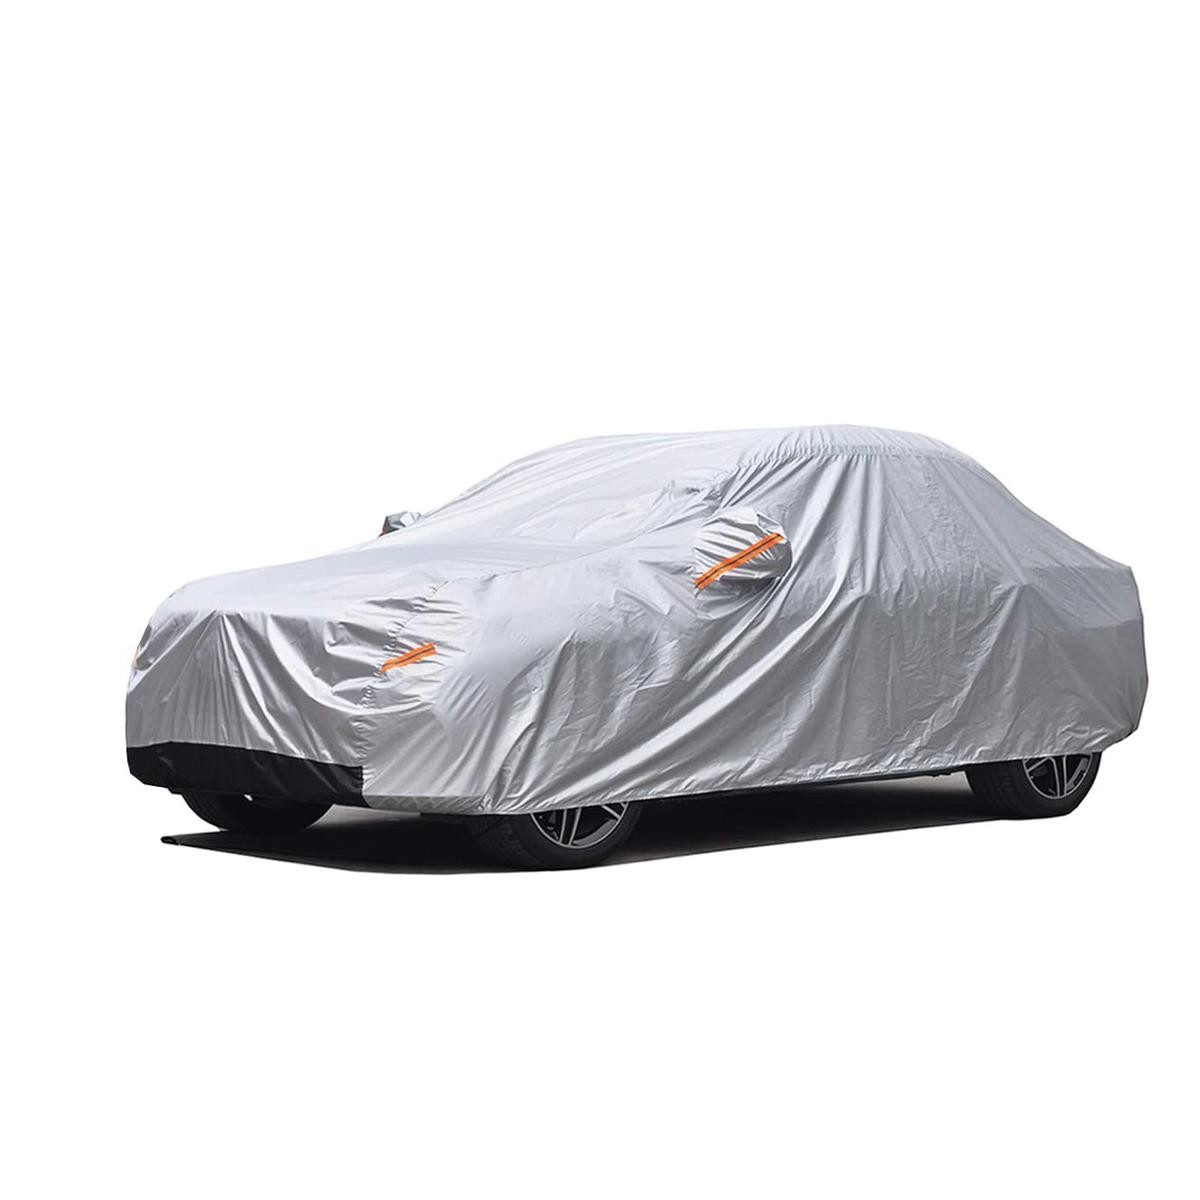 Autoabdeckung Kegel S-M Hatchback- Winter, 255-275cm/70cm 